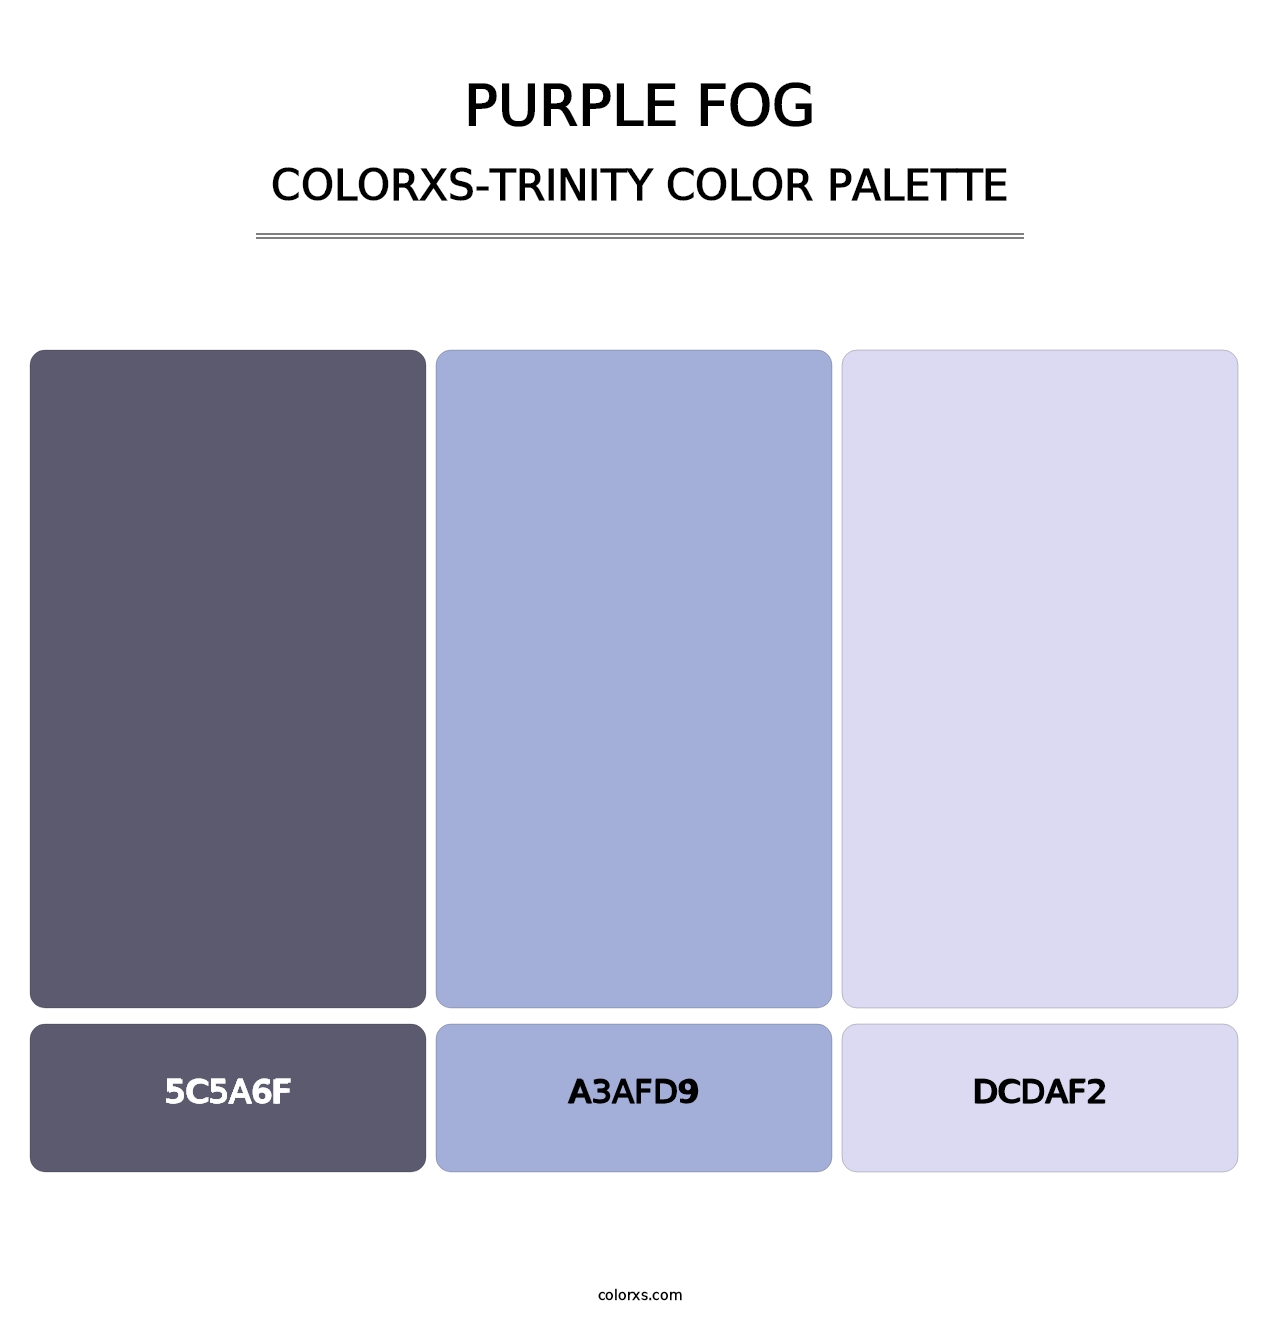 Purple Fog - Colorxs Trinity Palette